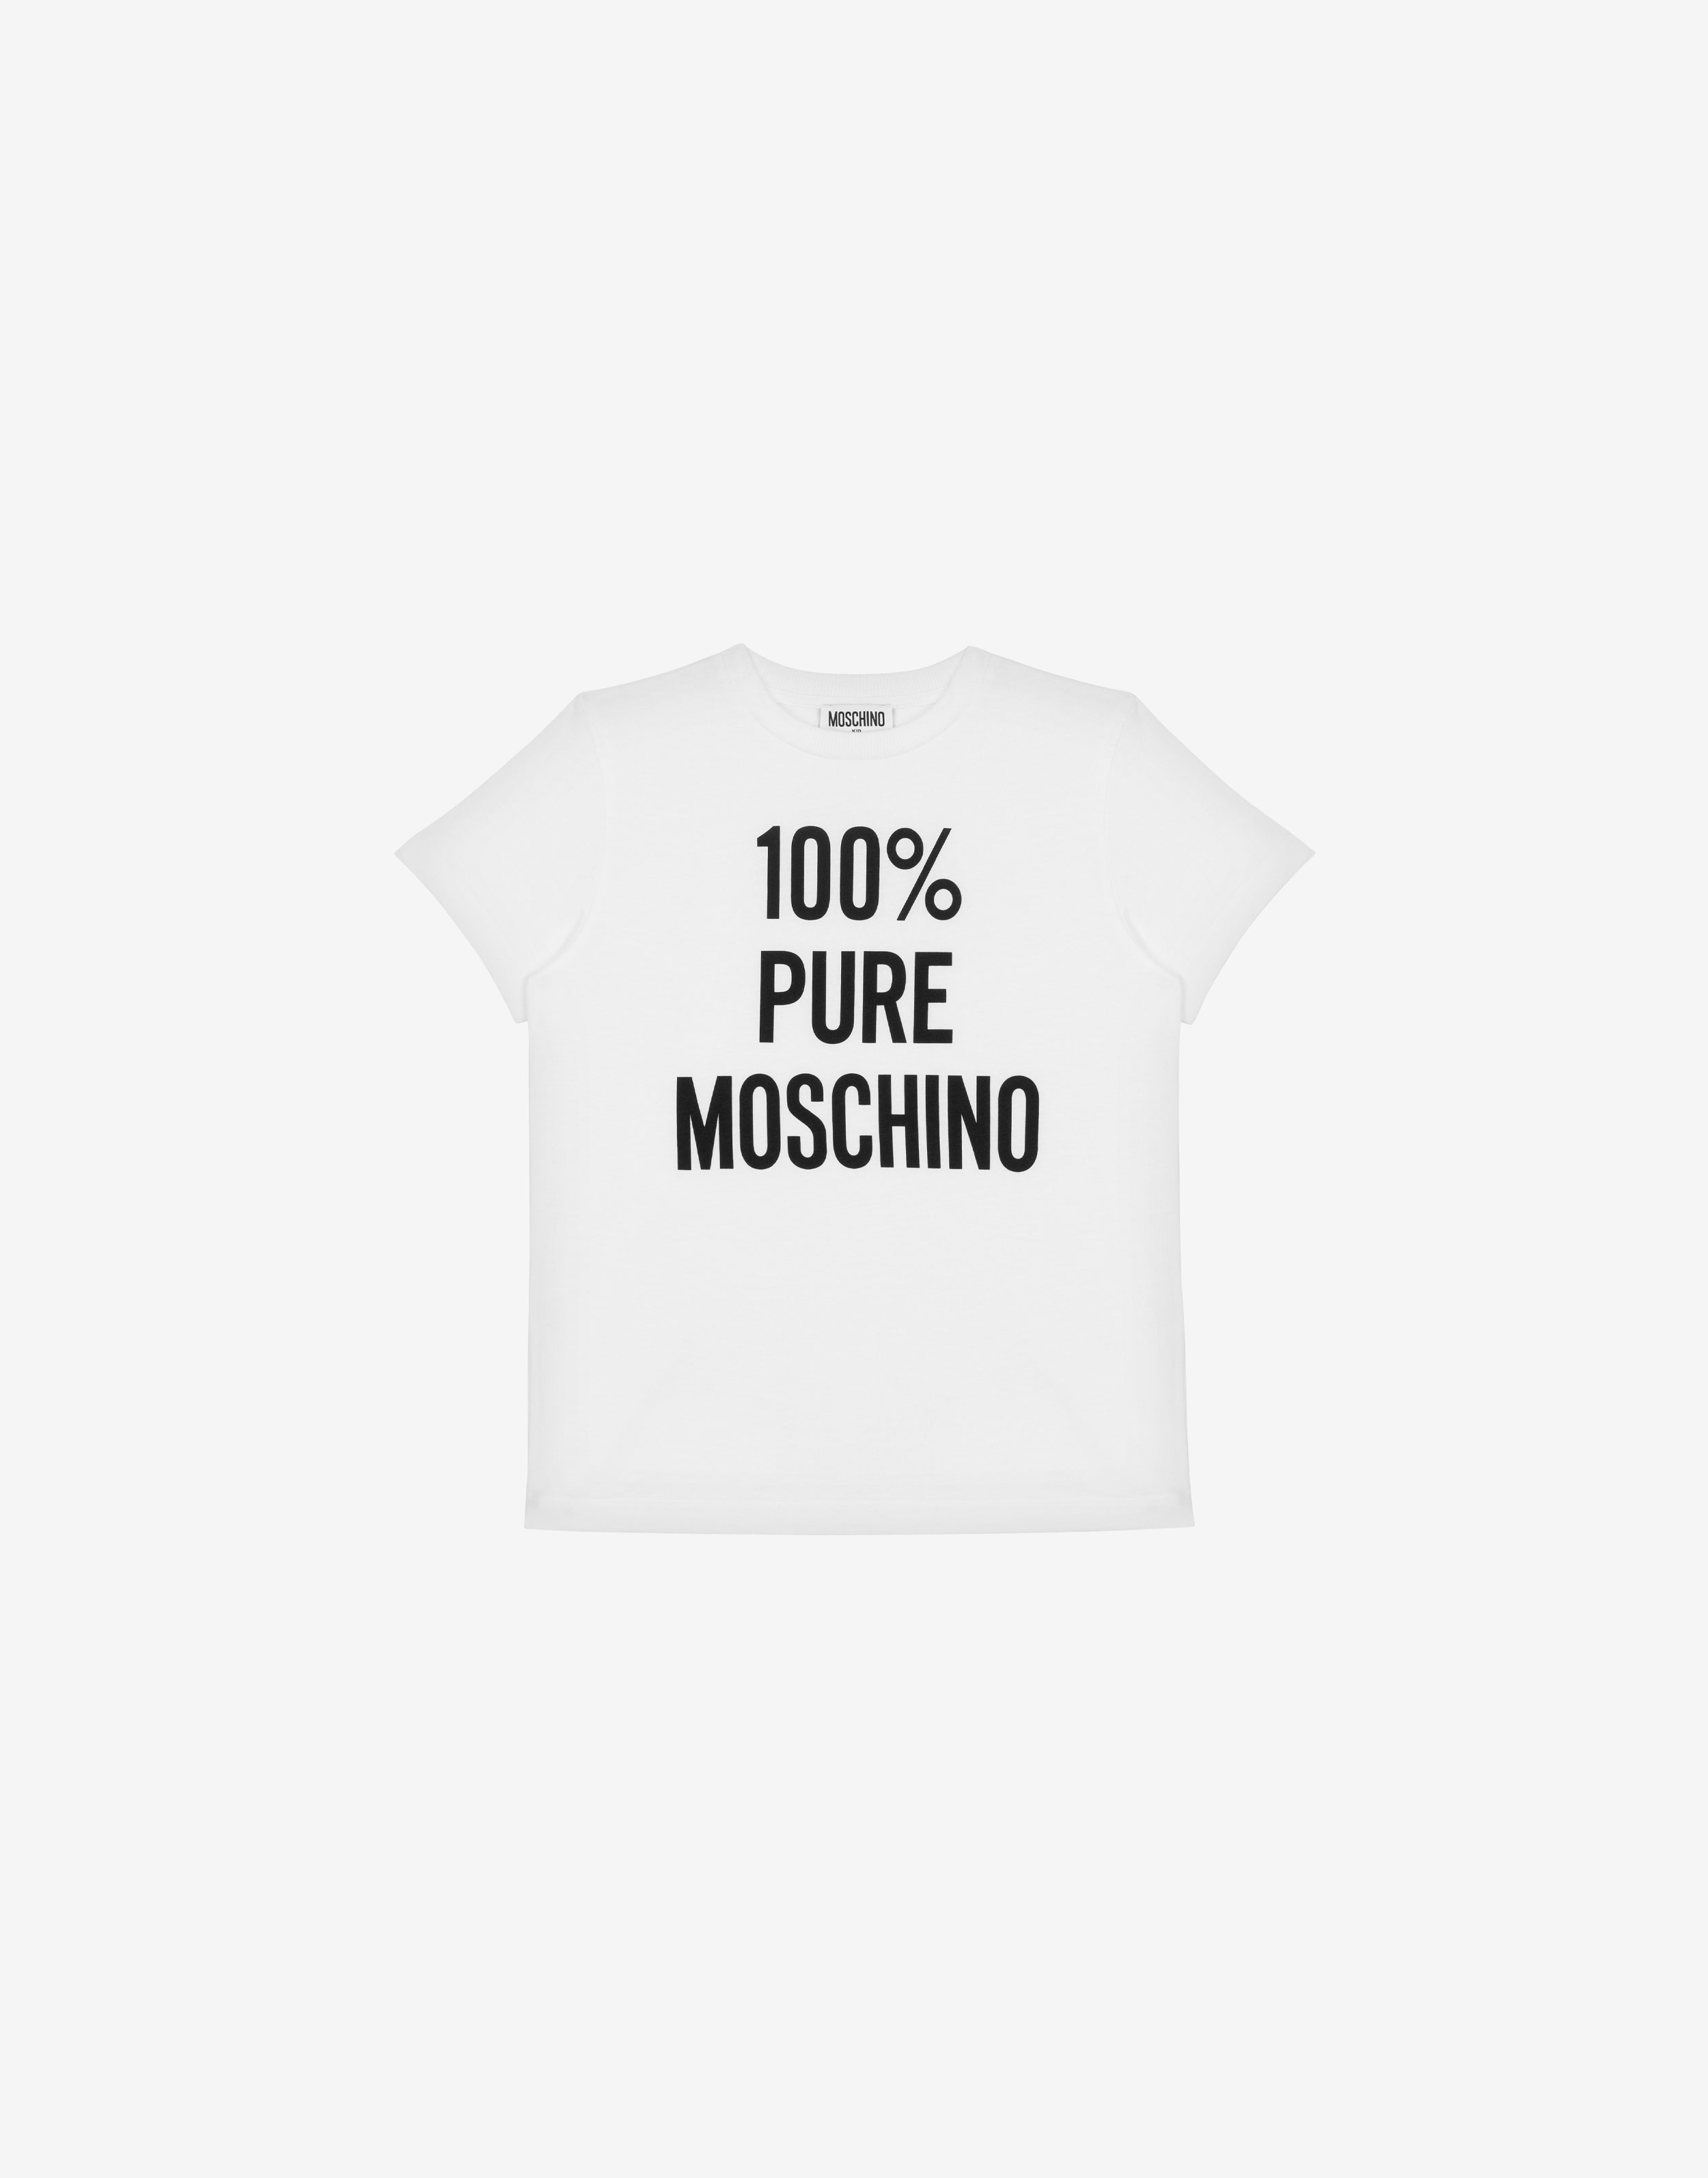 Toddler Moschino Space Shirt - Boys tops & t-shirts